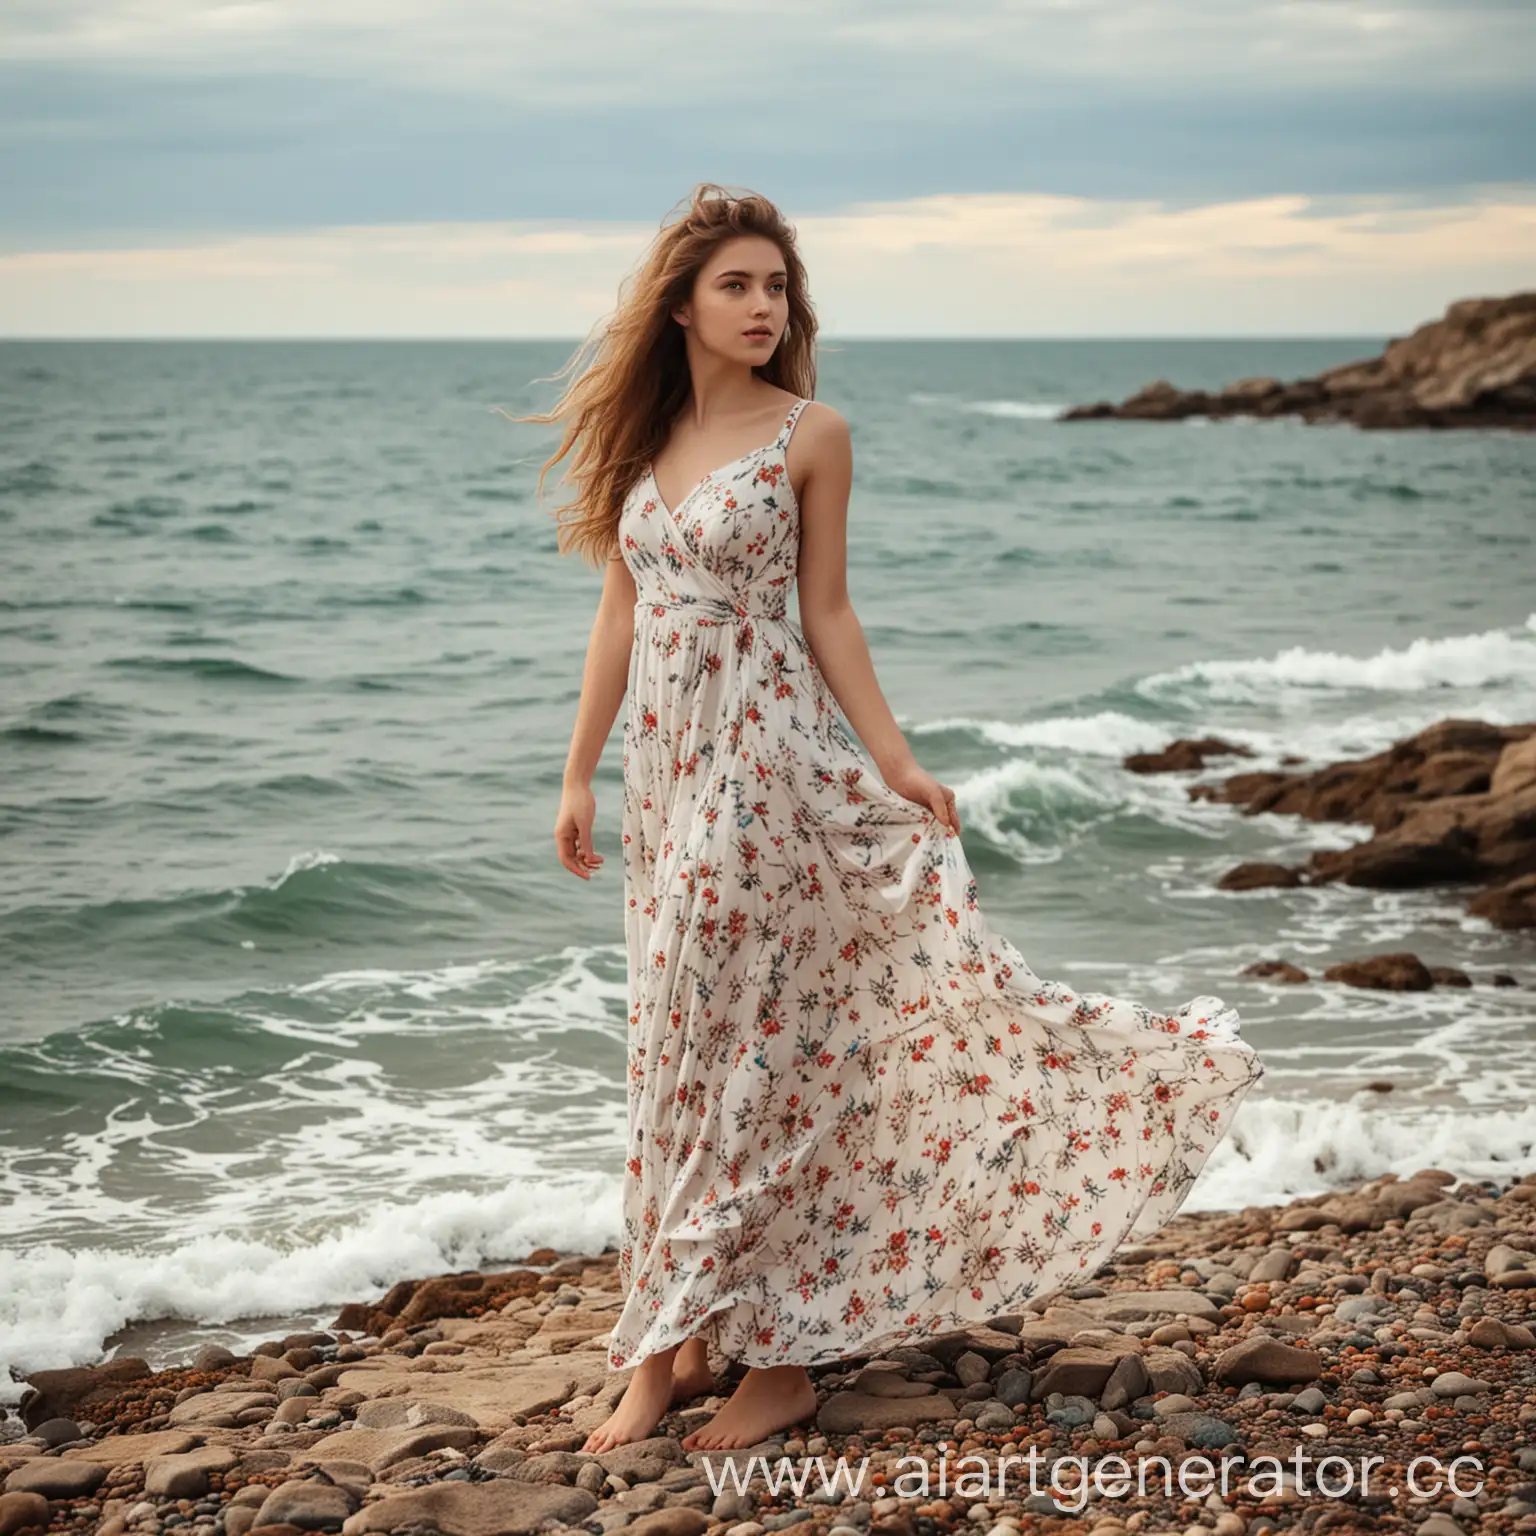 Elegant-Woman-Posing-in-a-Coastal-Sunset-Scene